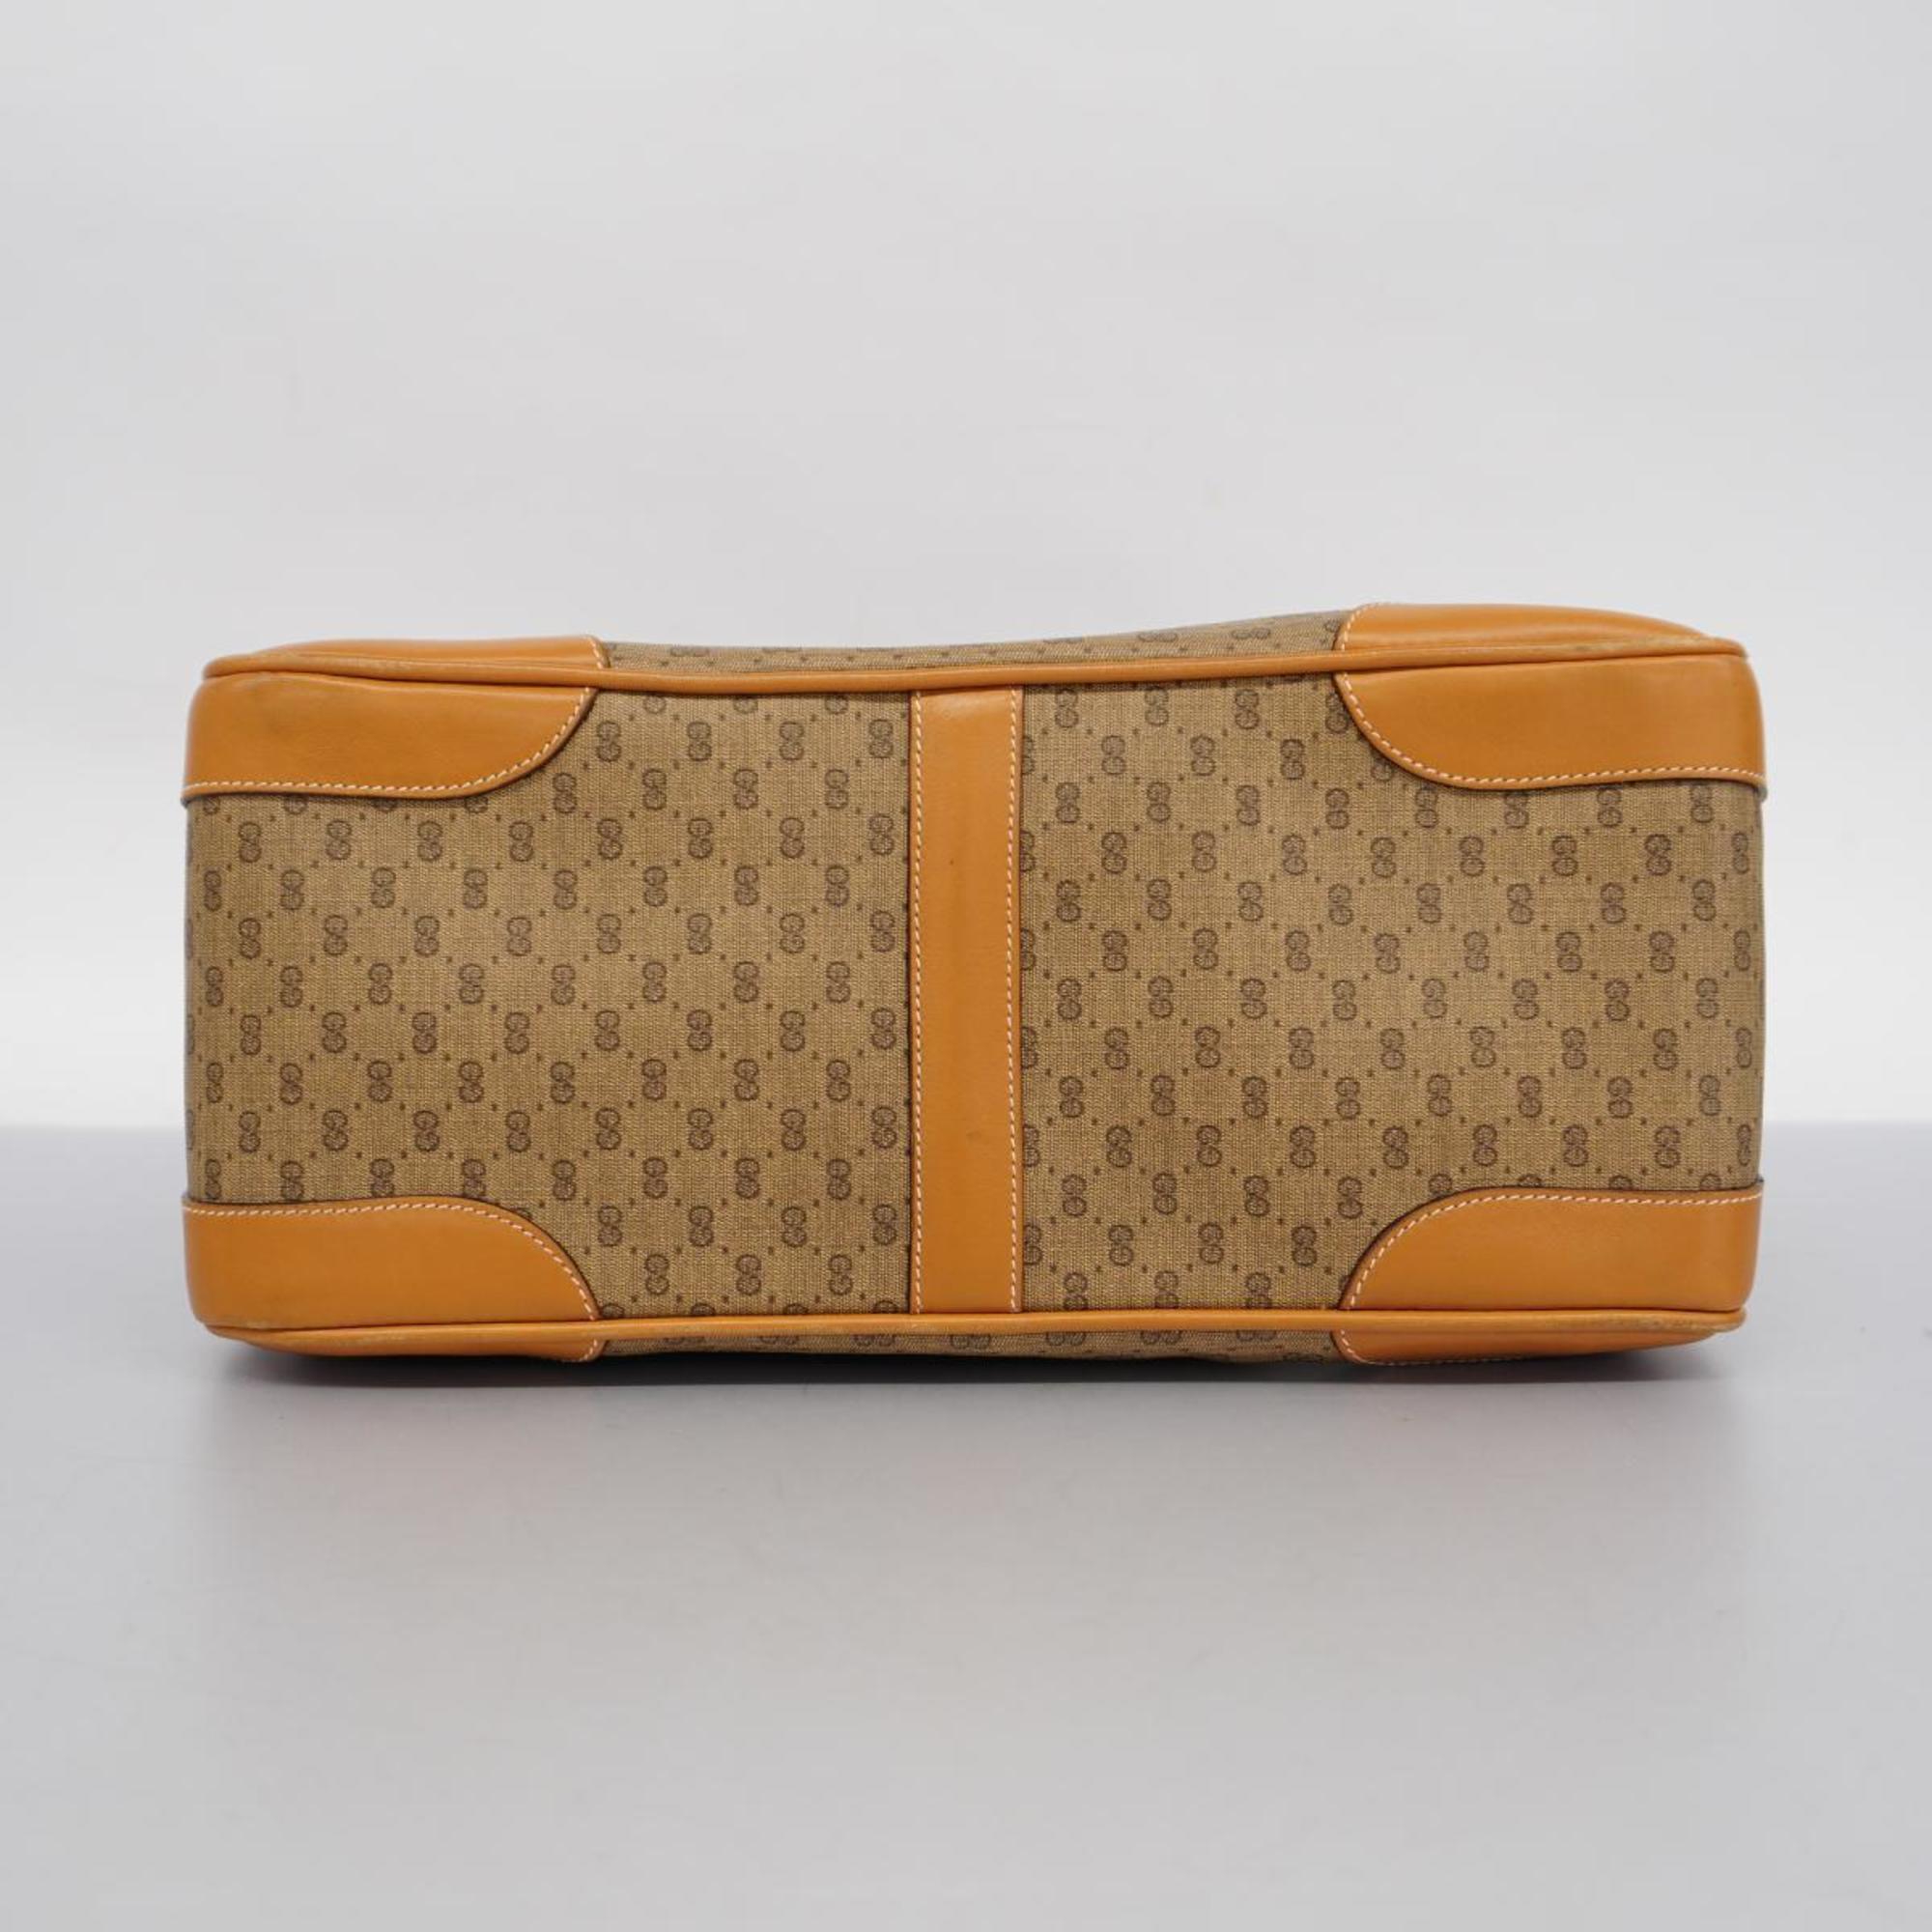 Gucci handbag Micro GG 002 084 0033 leather brown ladies